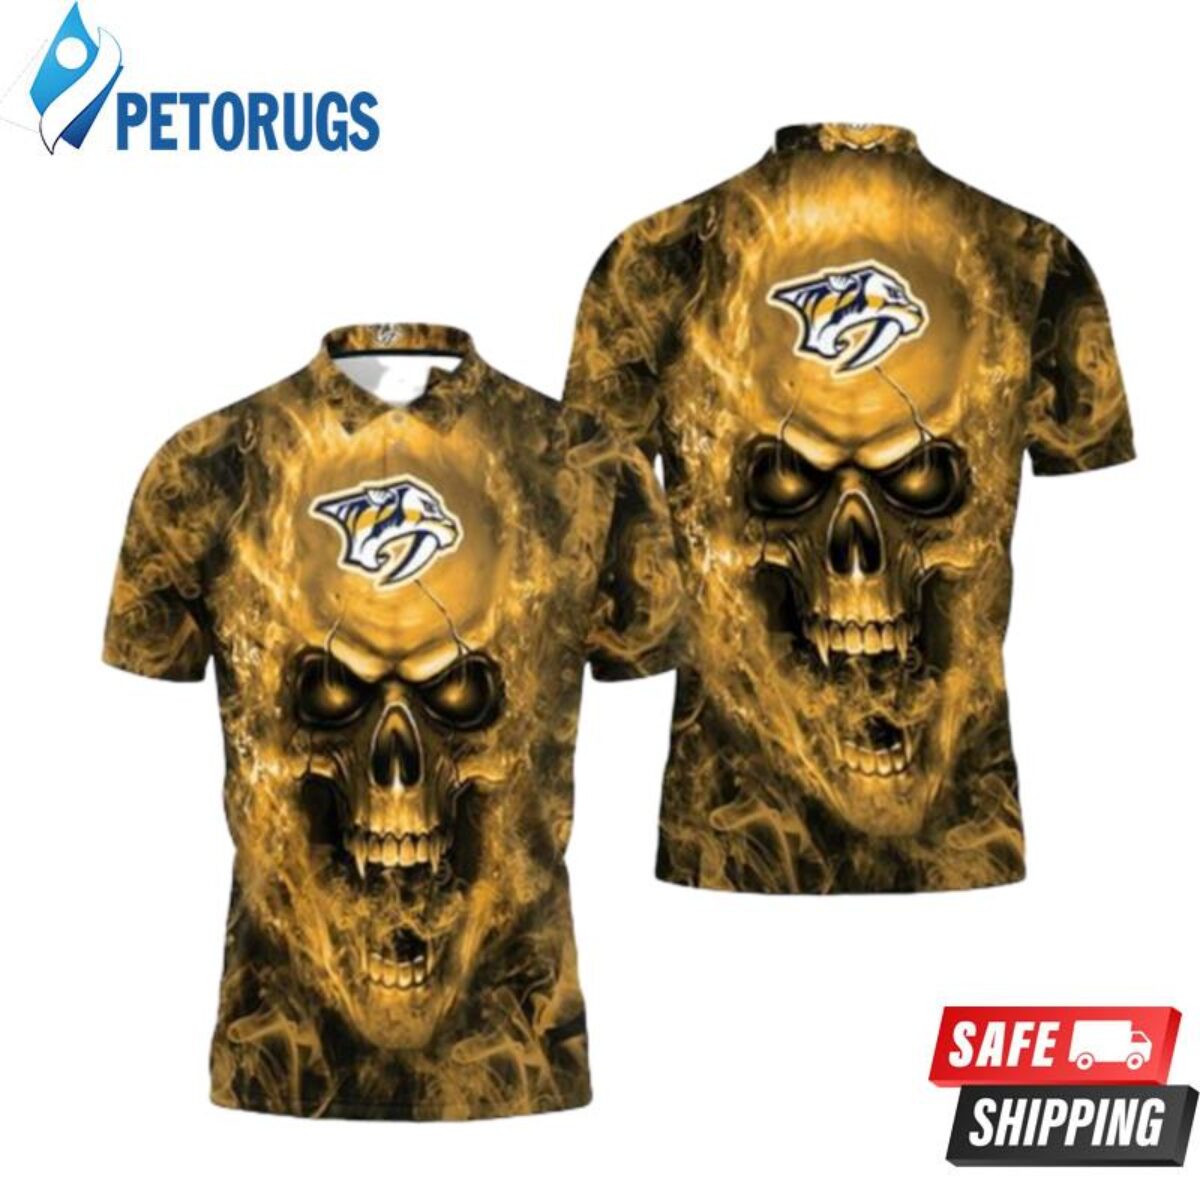 Nashville Predators Nhl Fans Skull Polo Shirts - Peto Rugs